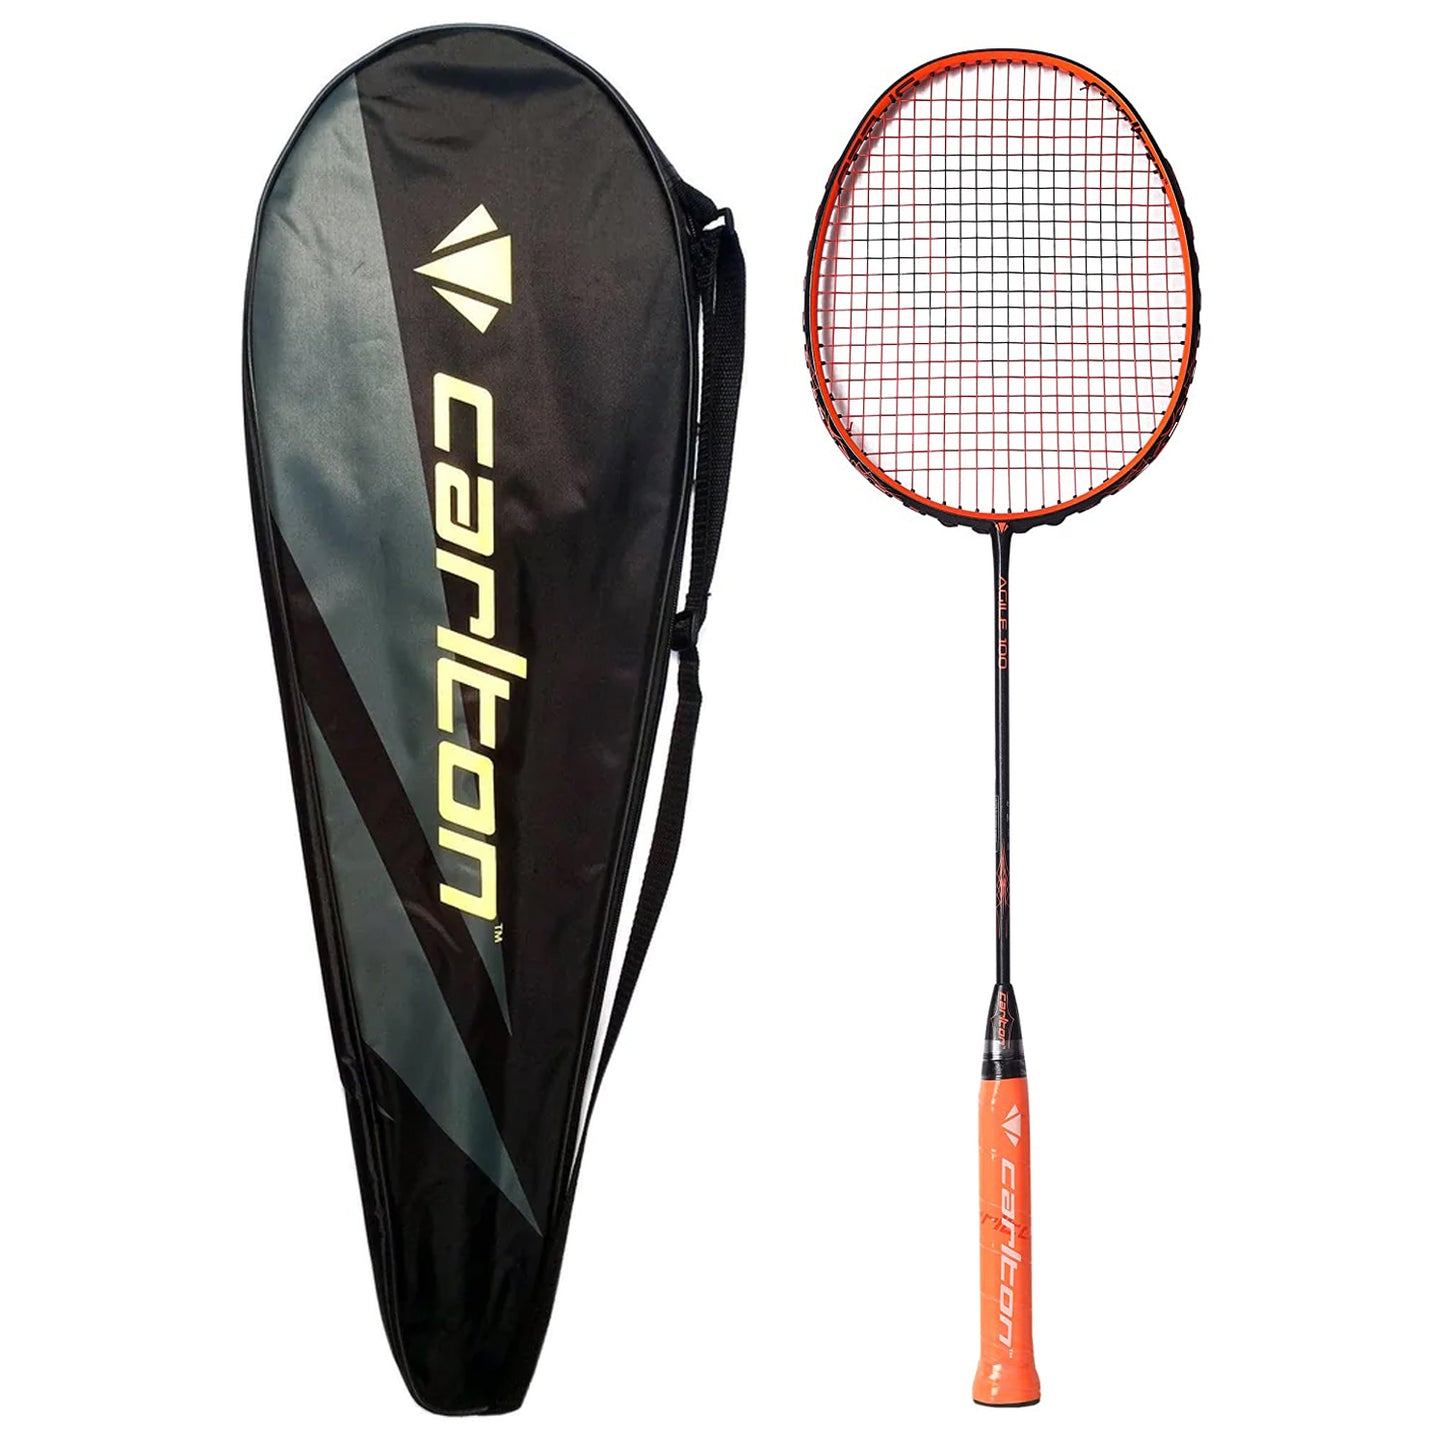 Carlon Agile 100 Strung Badminton Racquet, Black/Orange - Best Price online Prokicksports.com